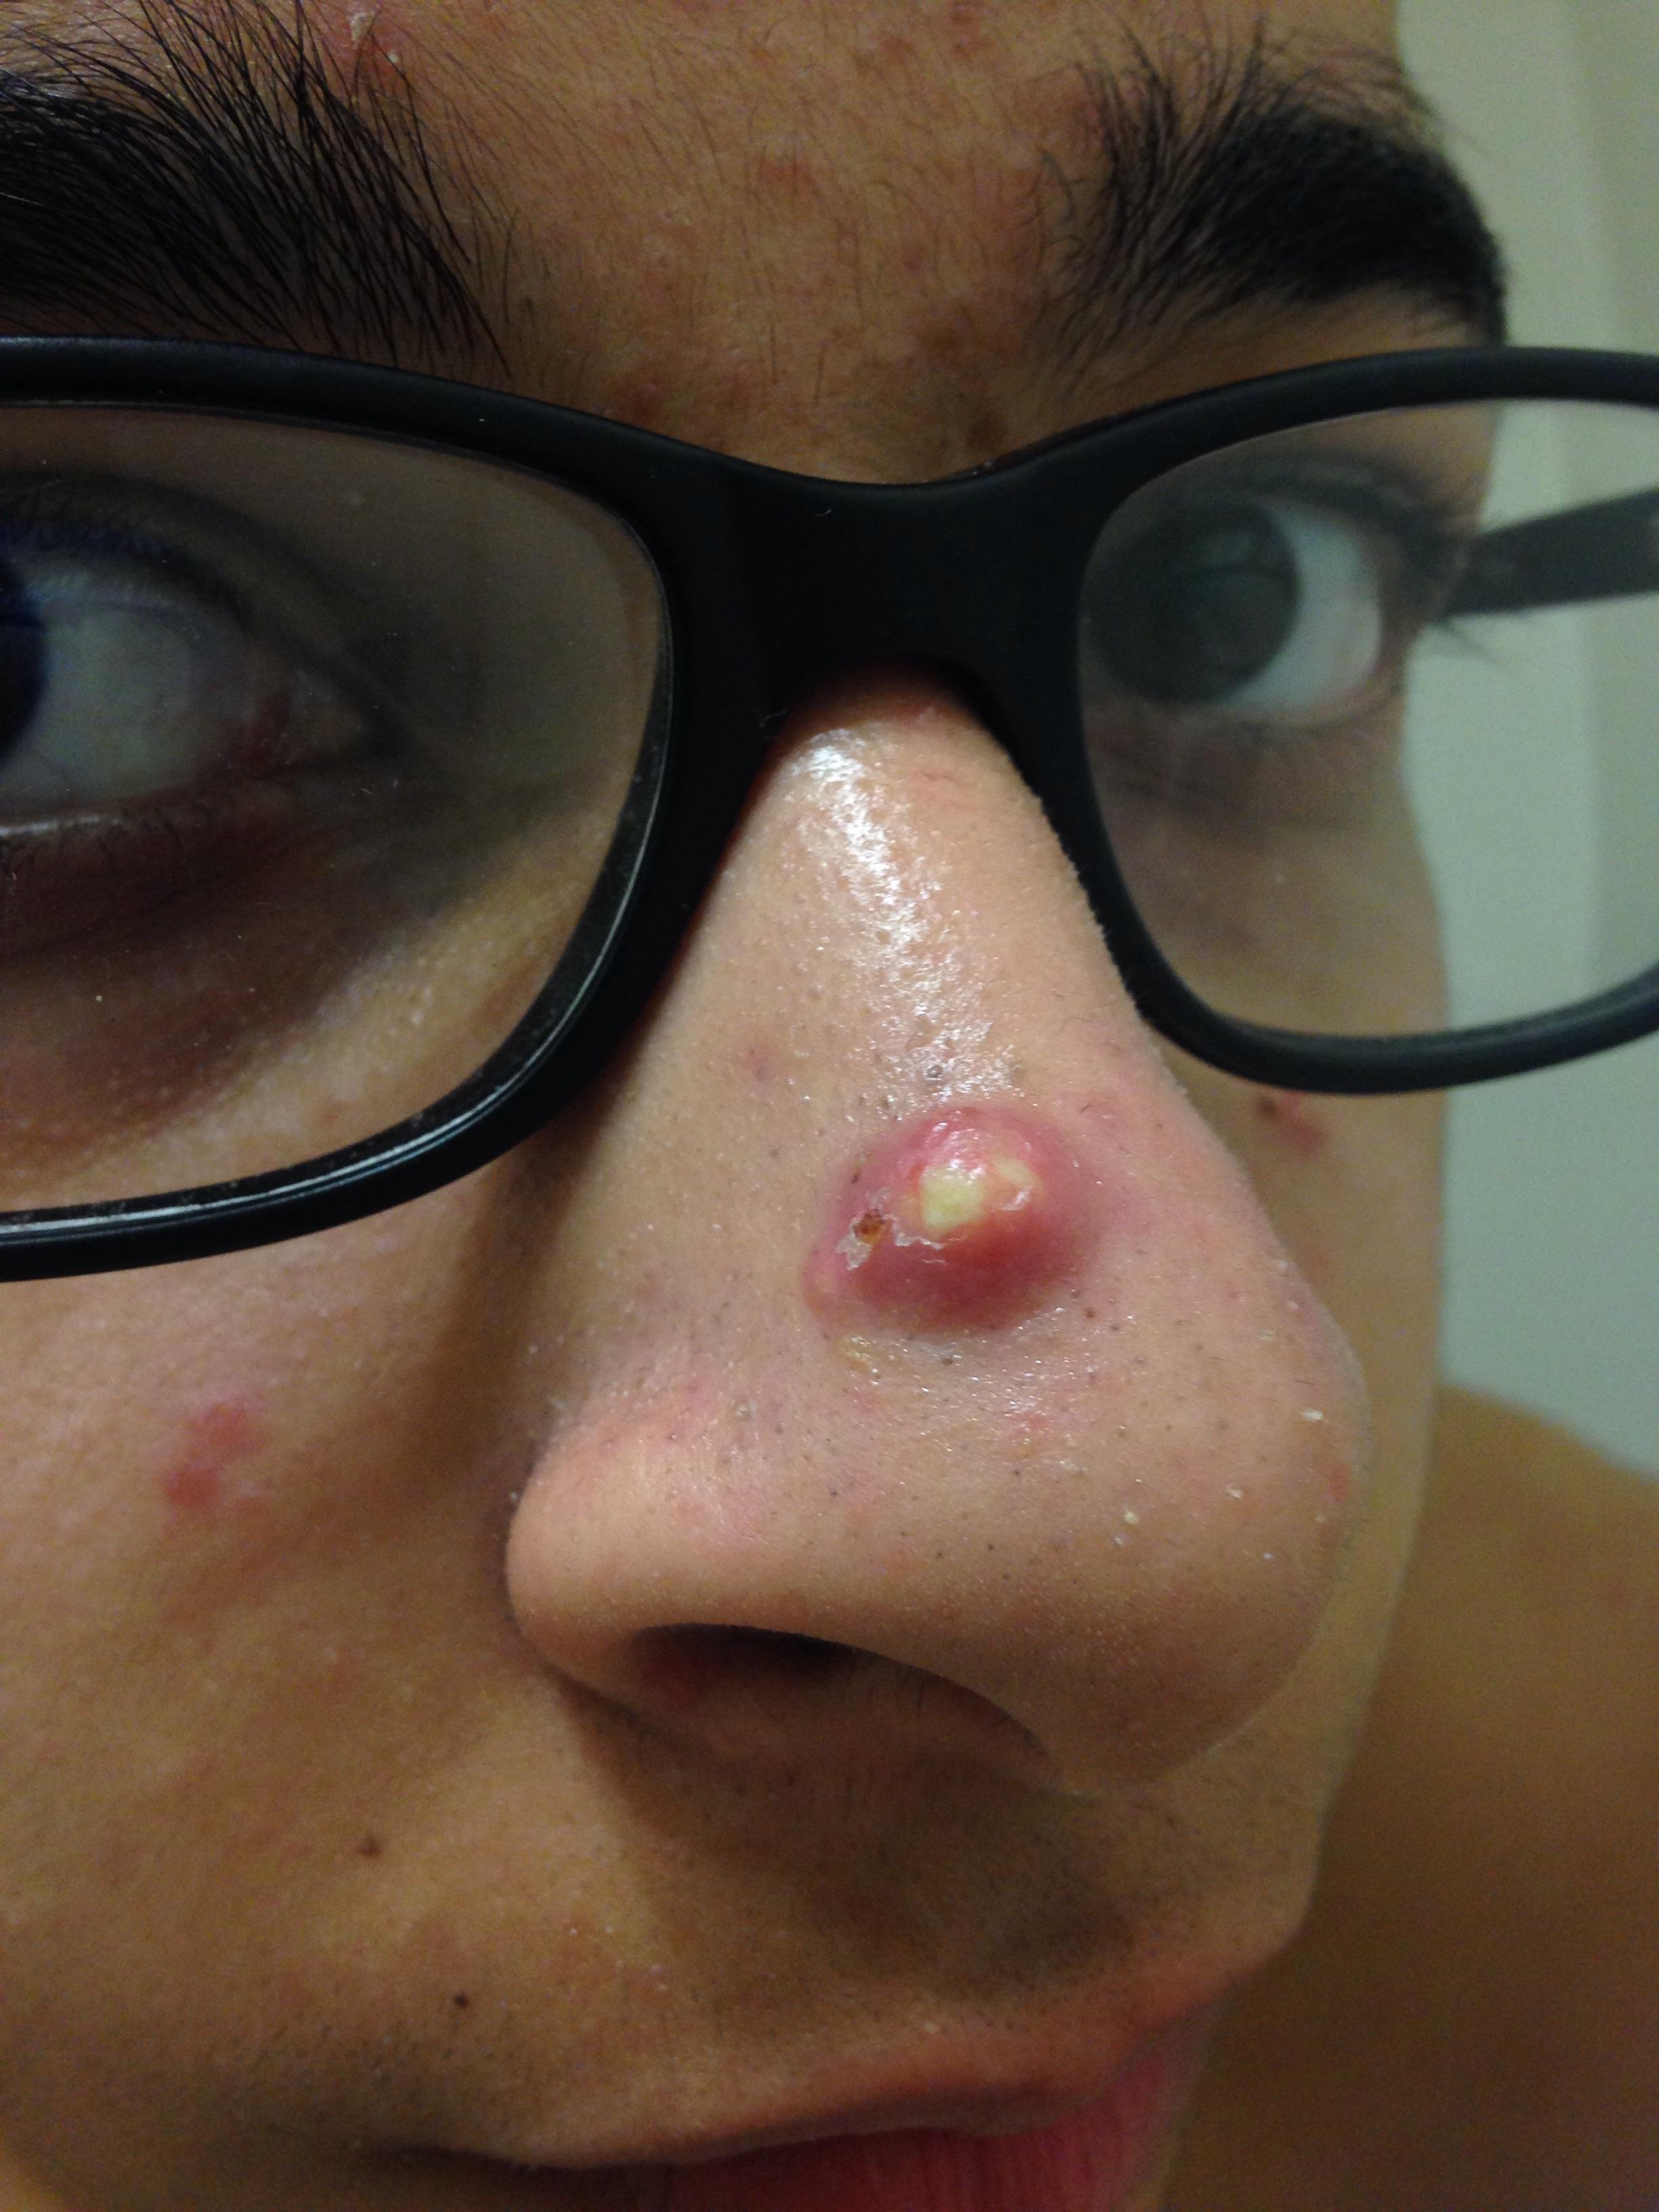 pimple under nose